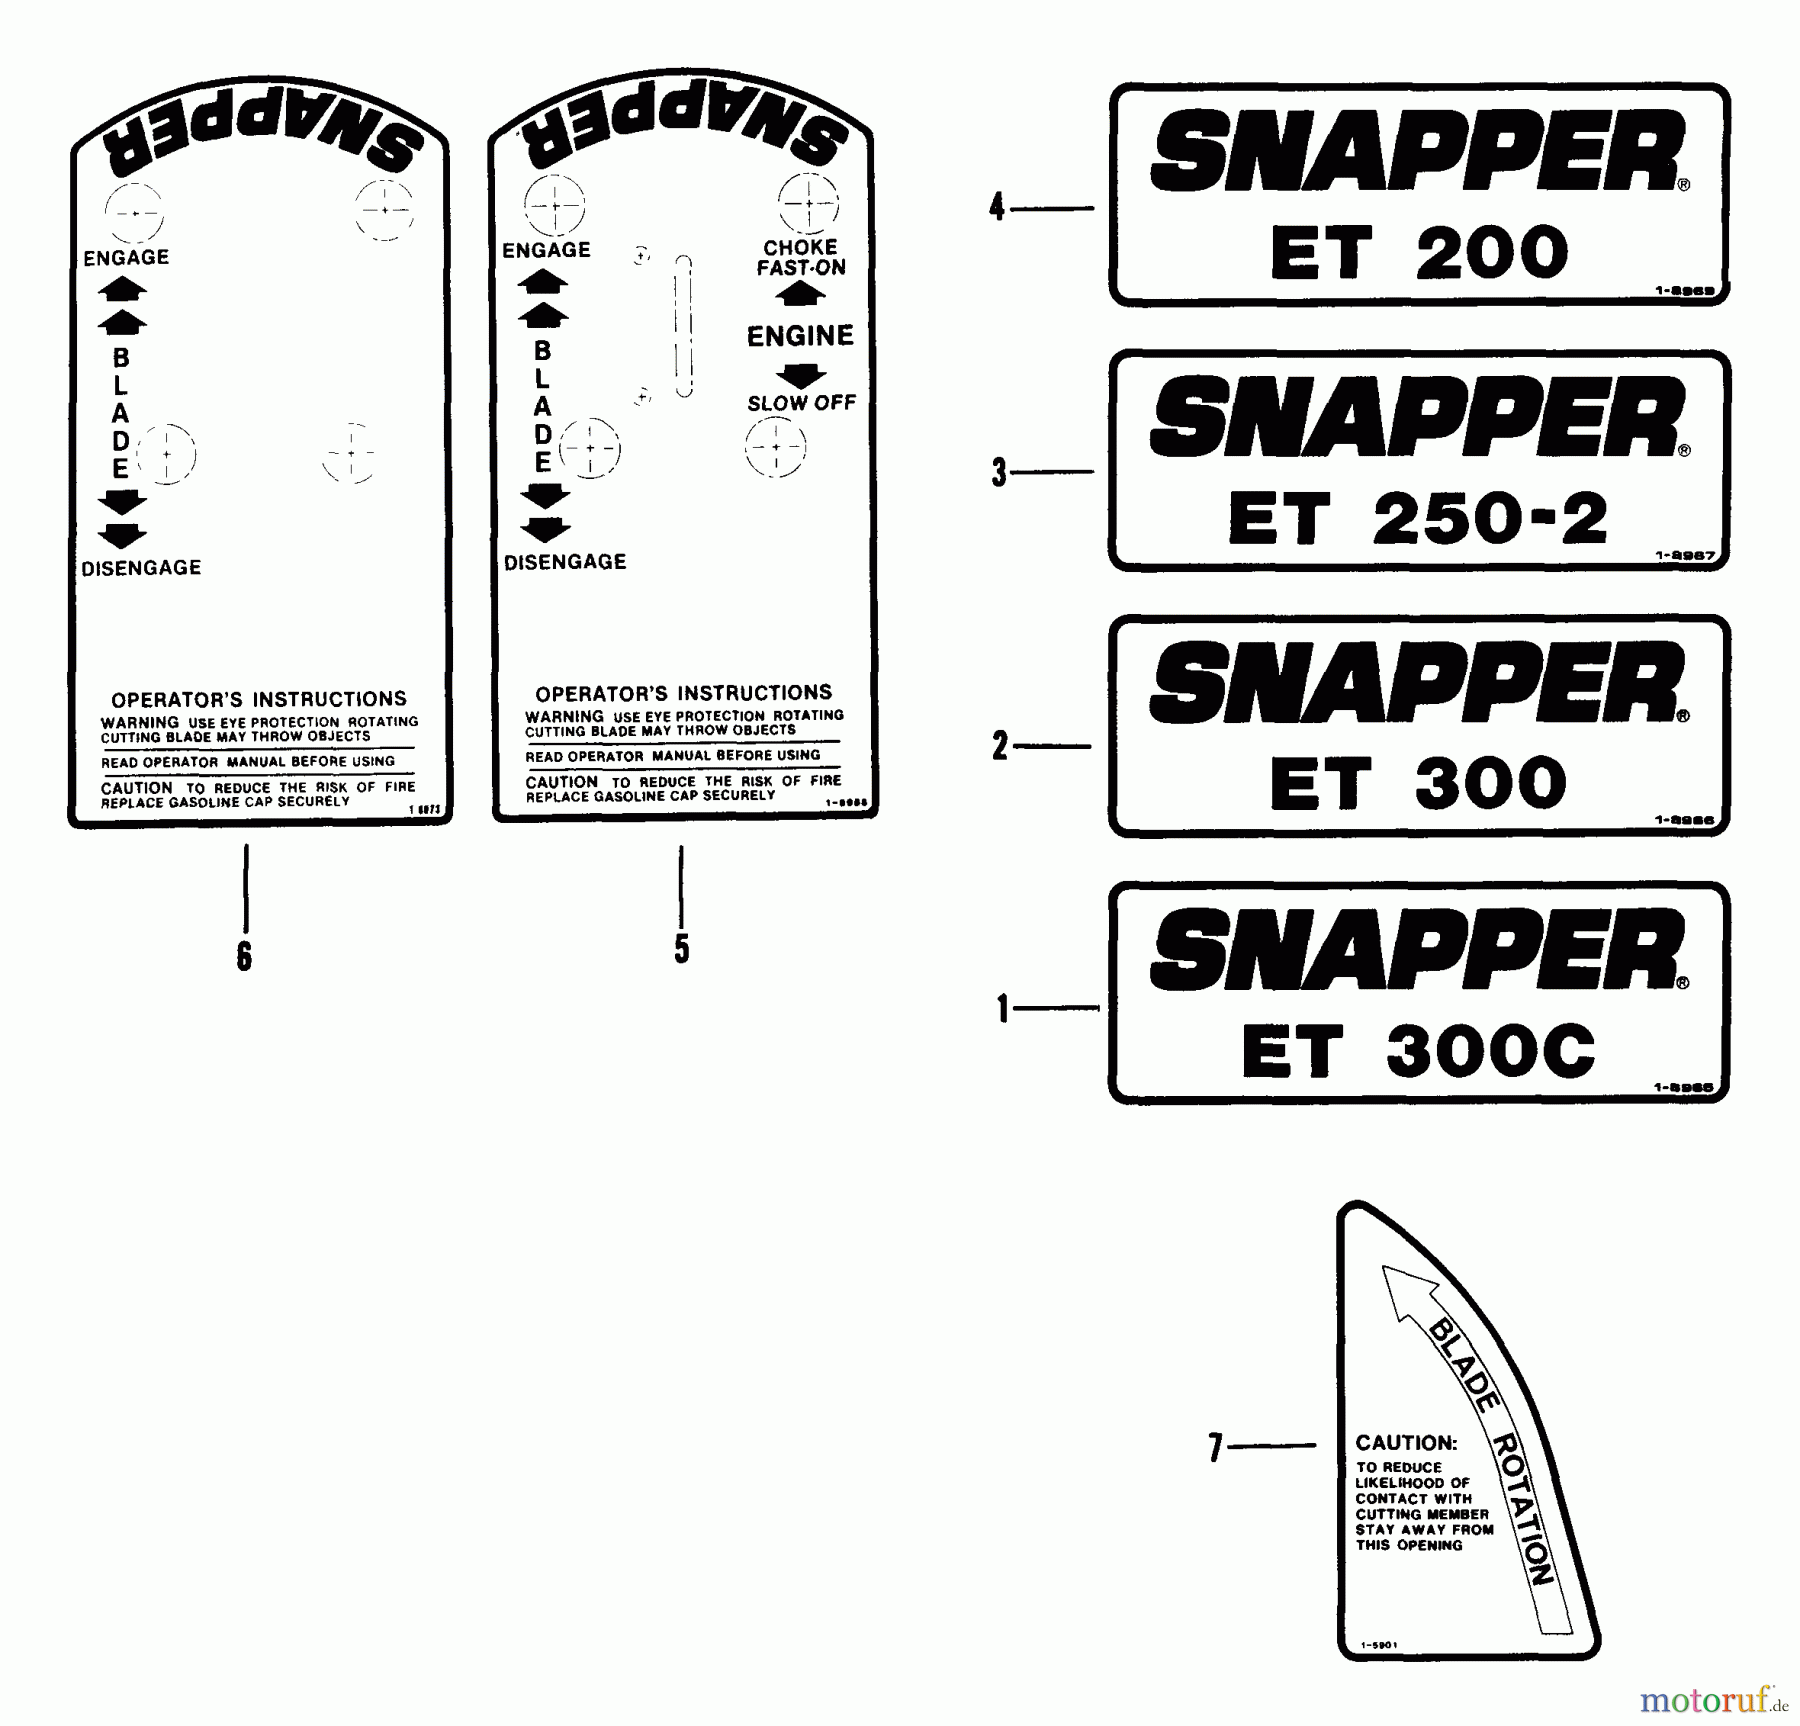  Snapper Kantenschneider ETC301B - Snapper Commercial Edger Trimmer, 3 HP, Series 1 Decals